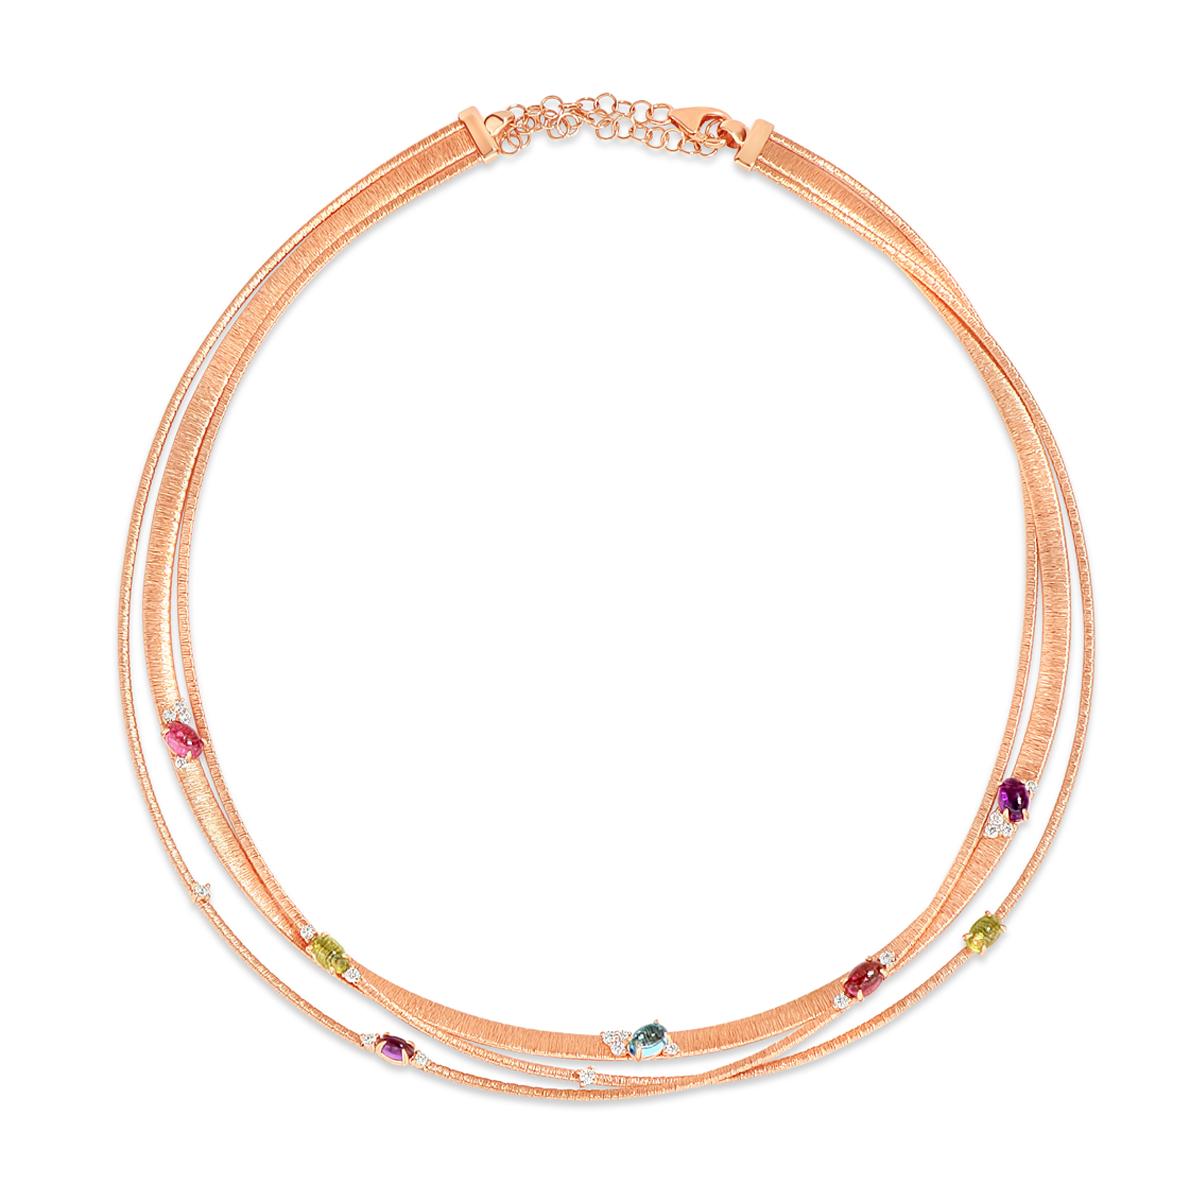 Brilliant Cut Fashion Necklace with Rainbow Drops and White Brilliant-Cut Diamond Accents For Sale